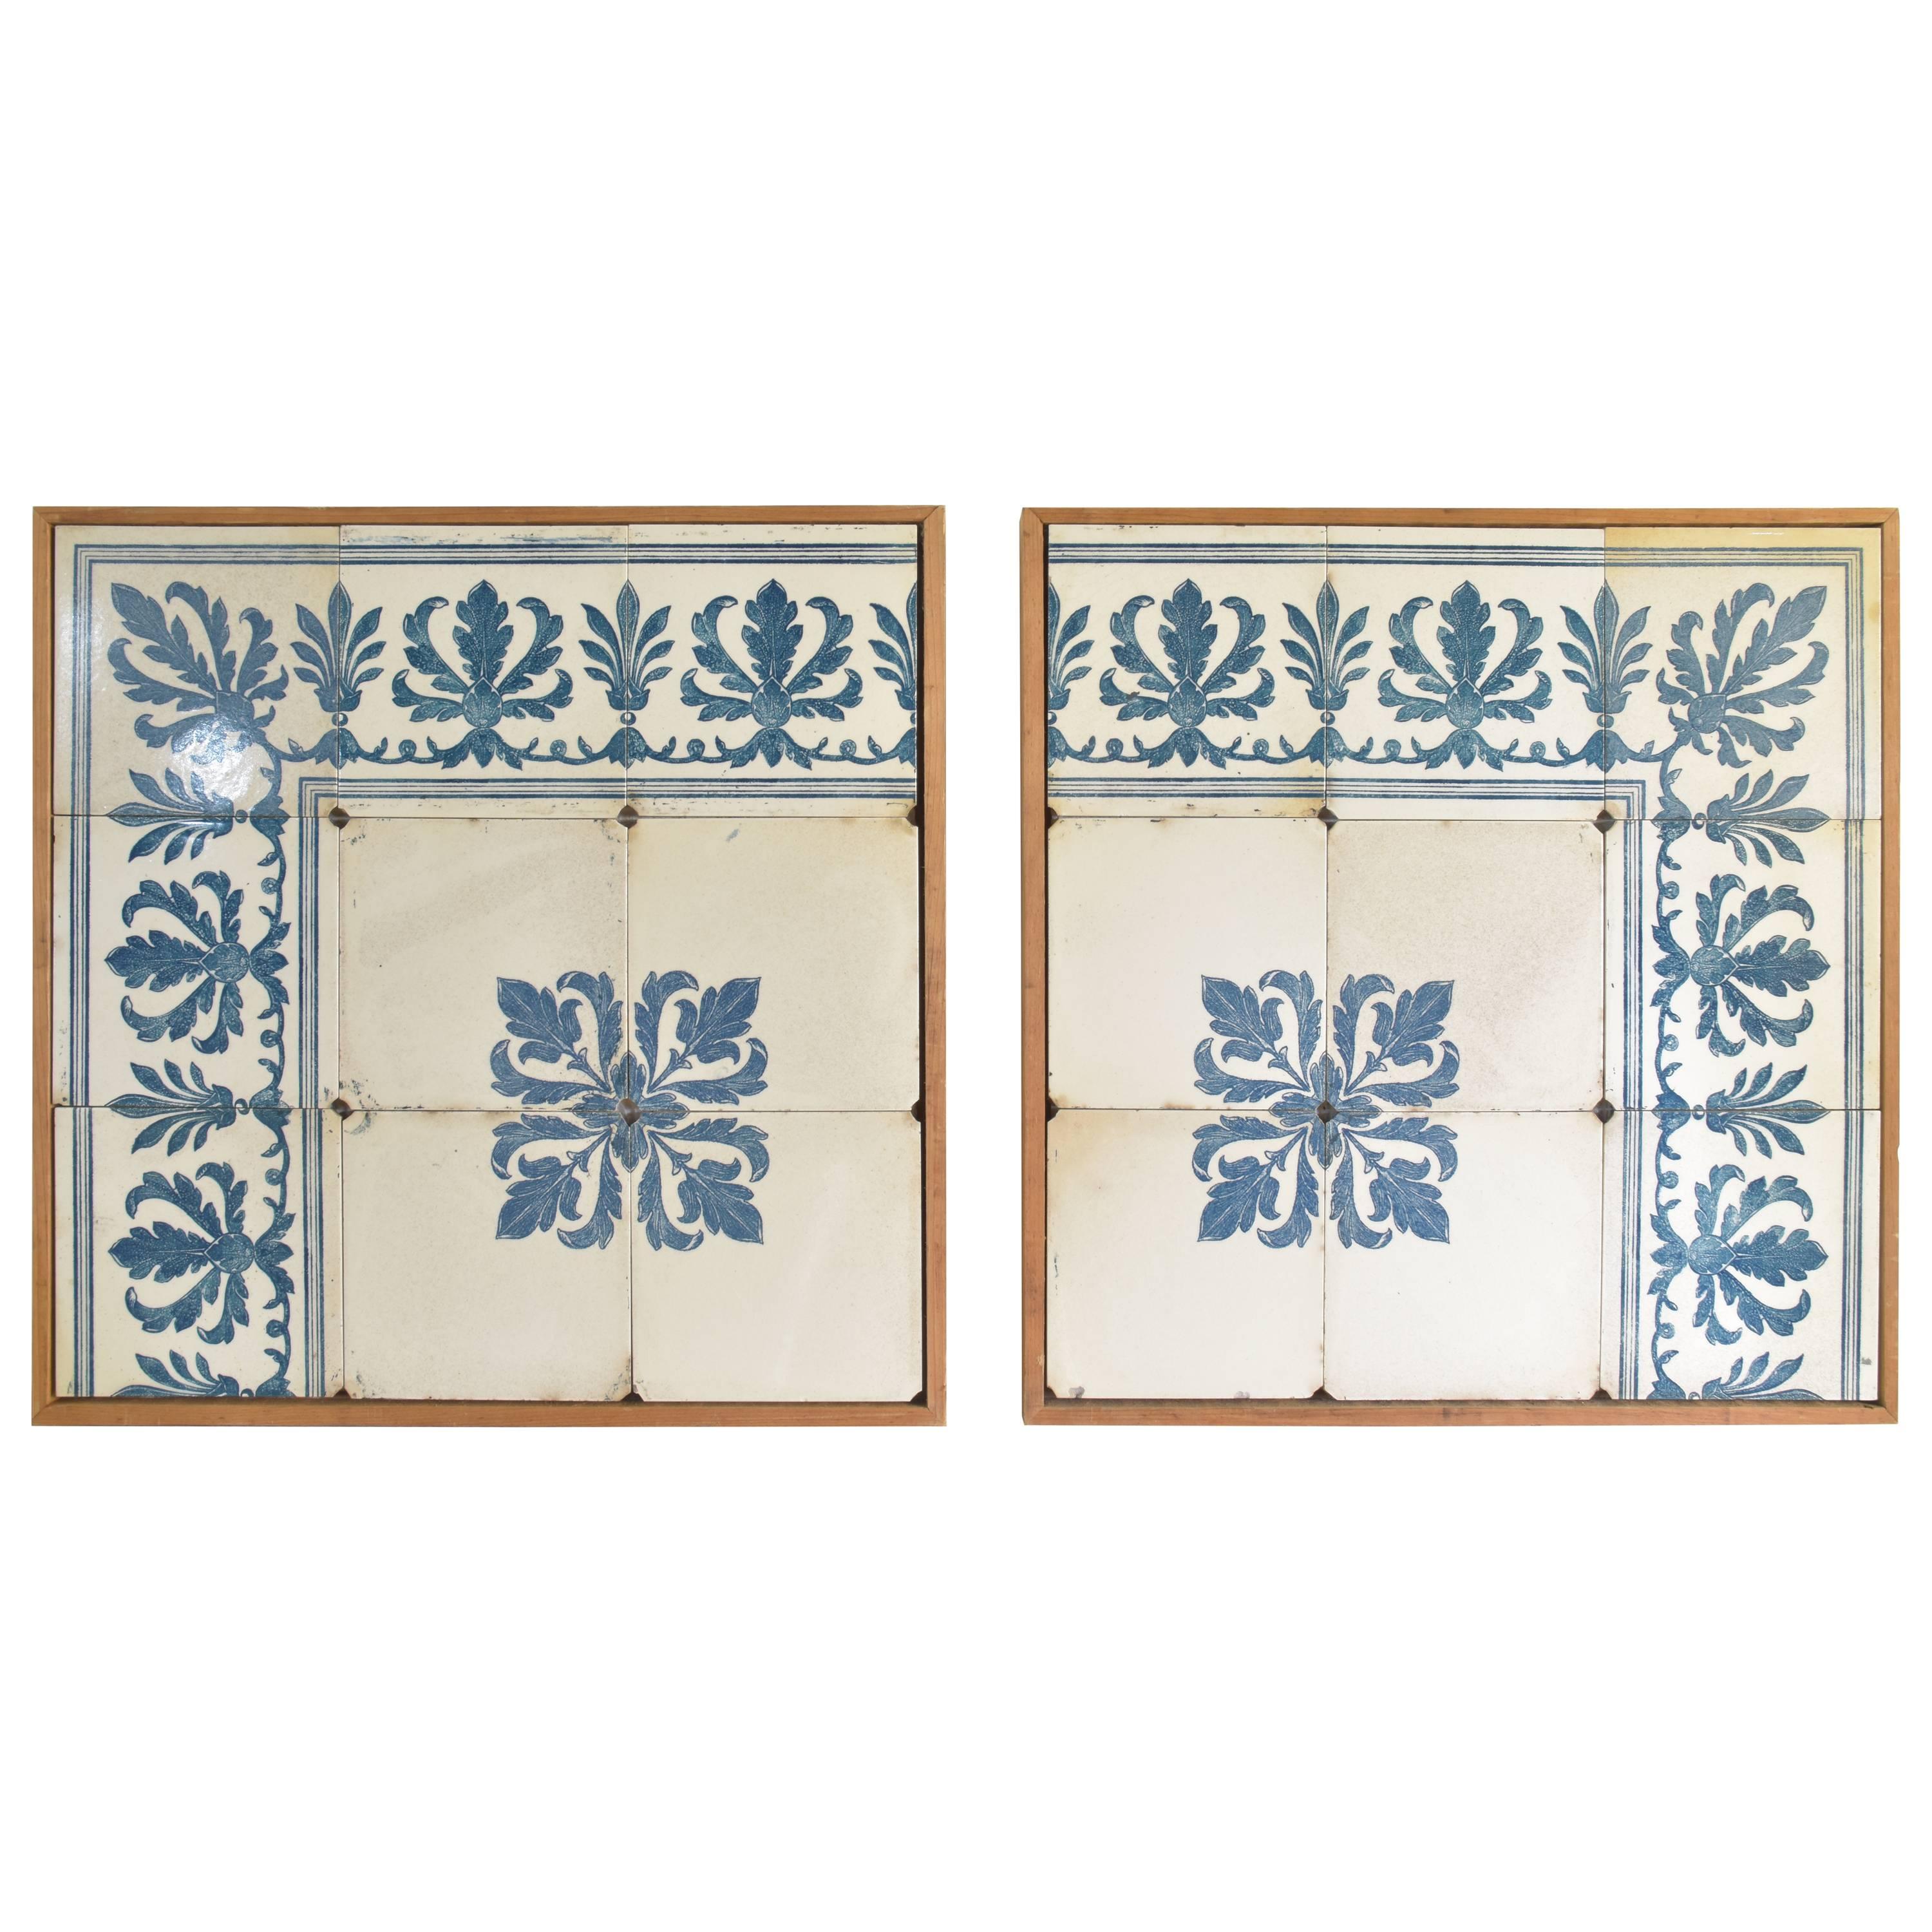 Antique Blue and White Portuguese Tiles Framed in Modern Wood Frames For Sale